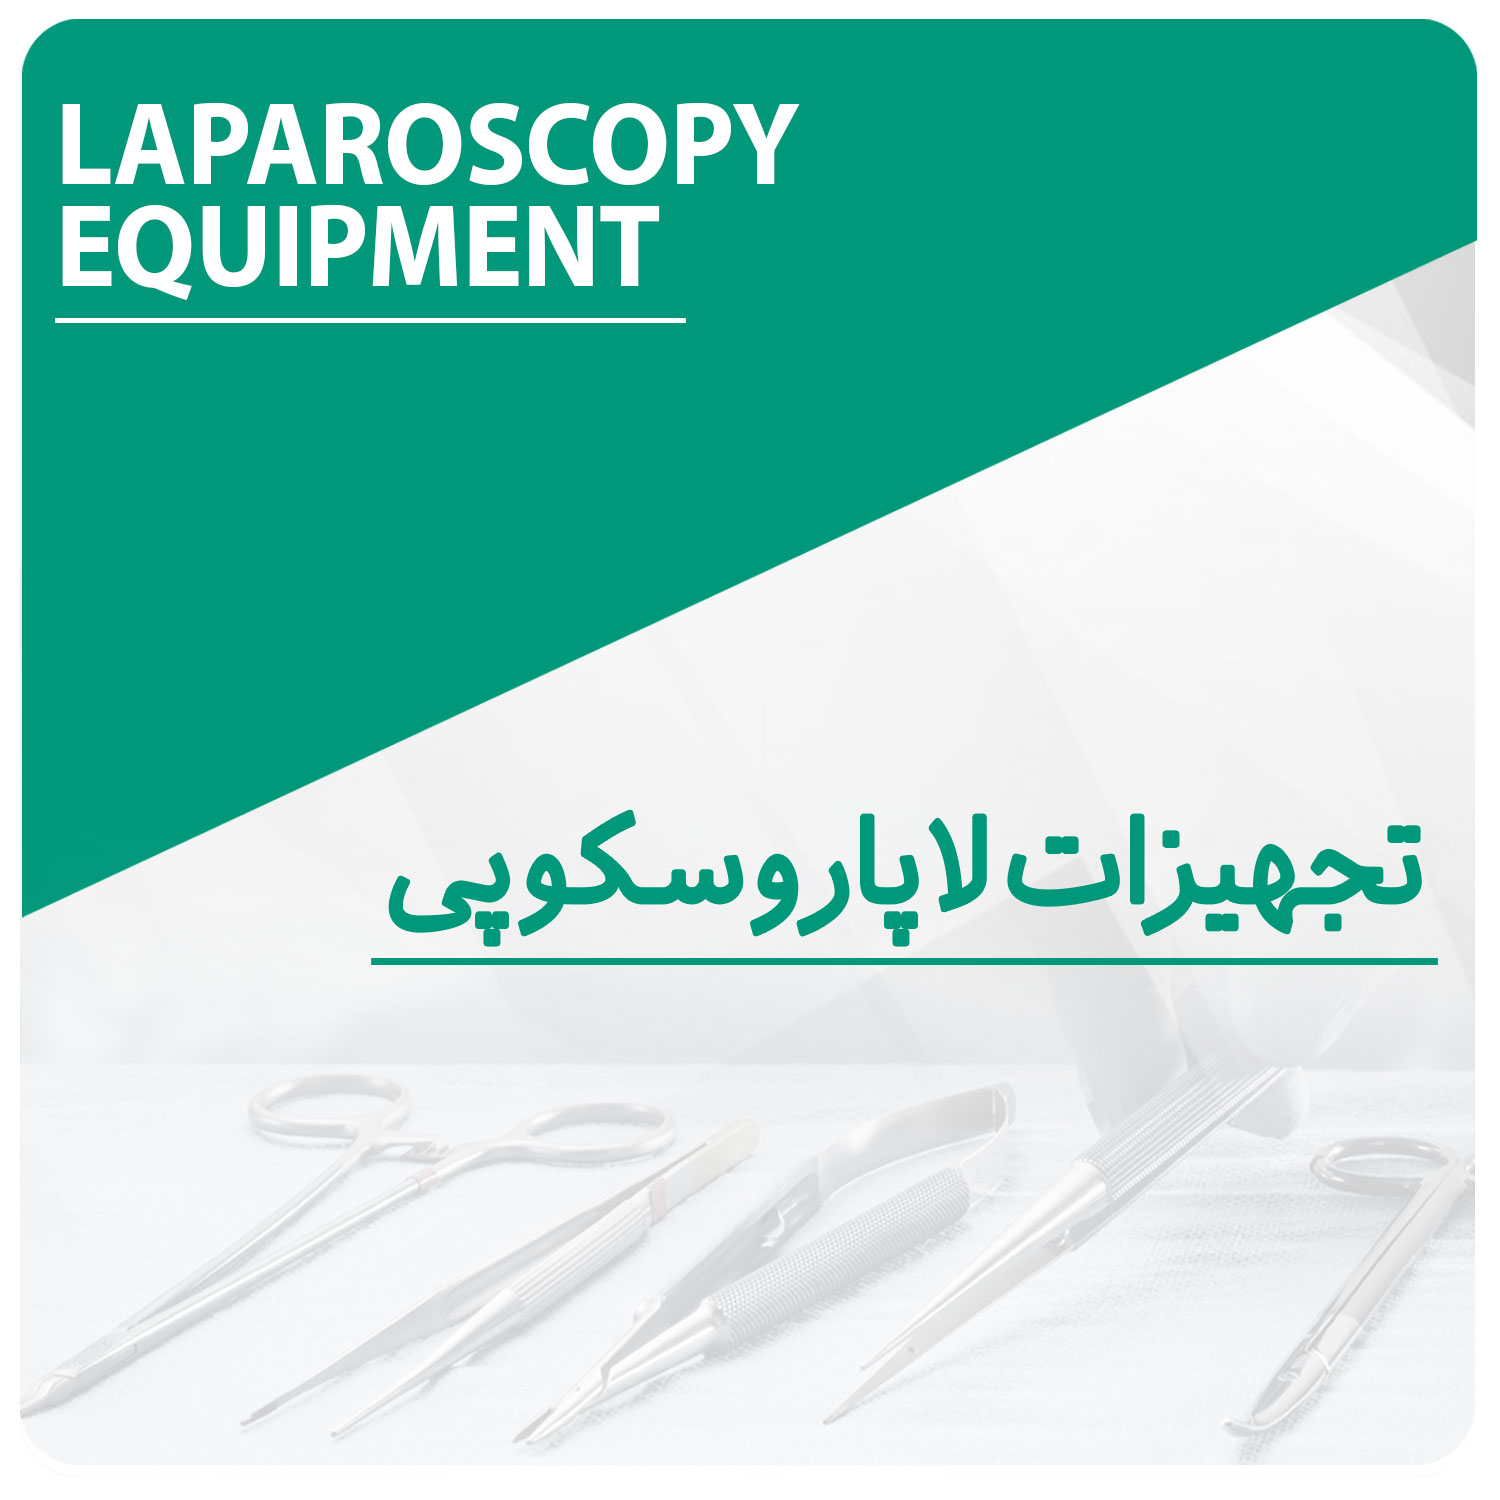 تجهیزات لاپاروسکوپی